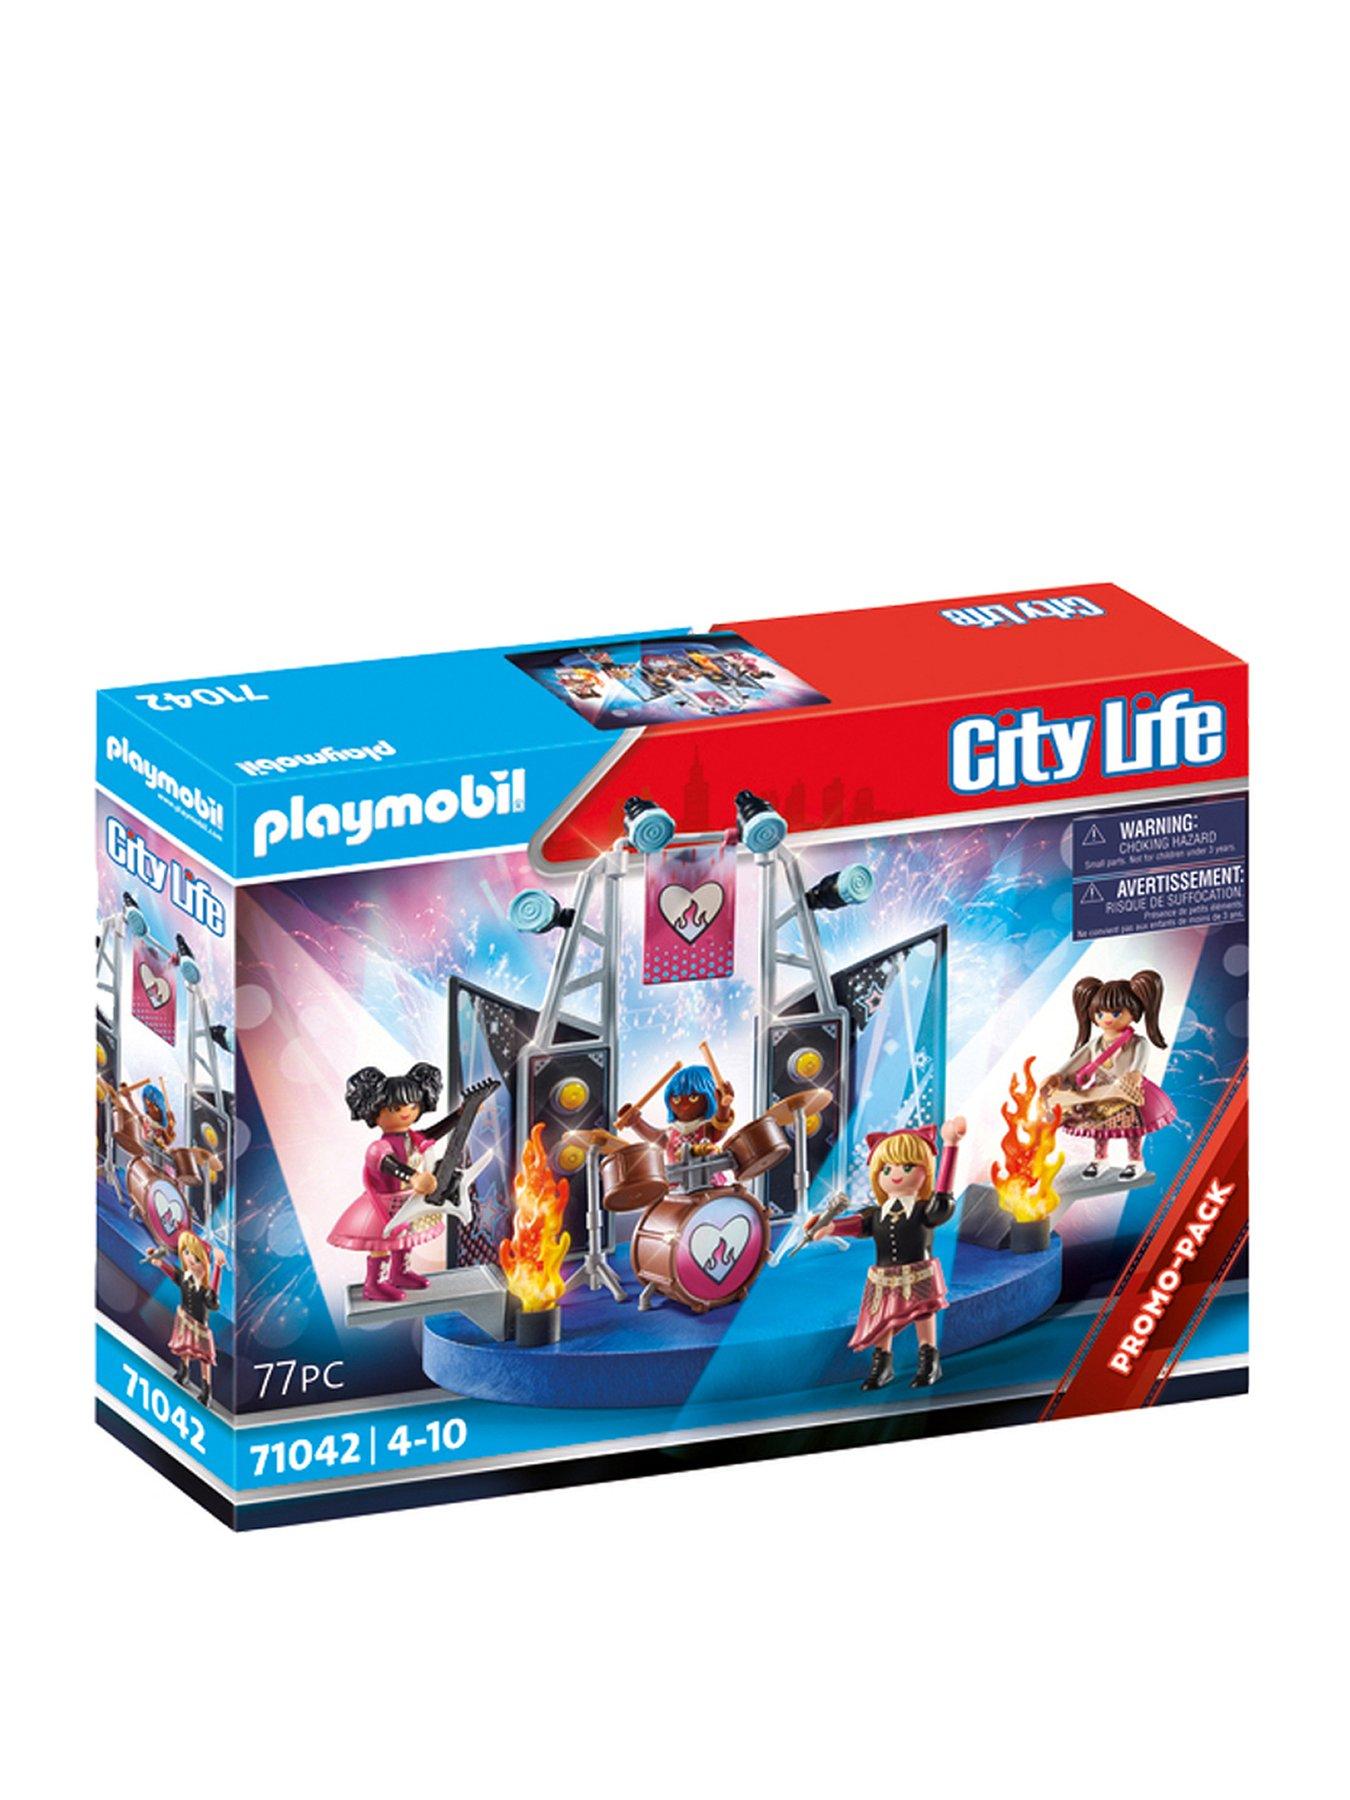 Uk bus  Playmobil, Playmobil sets, Lego city sets